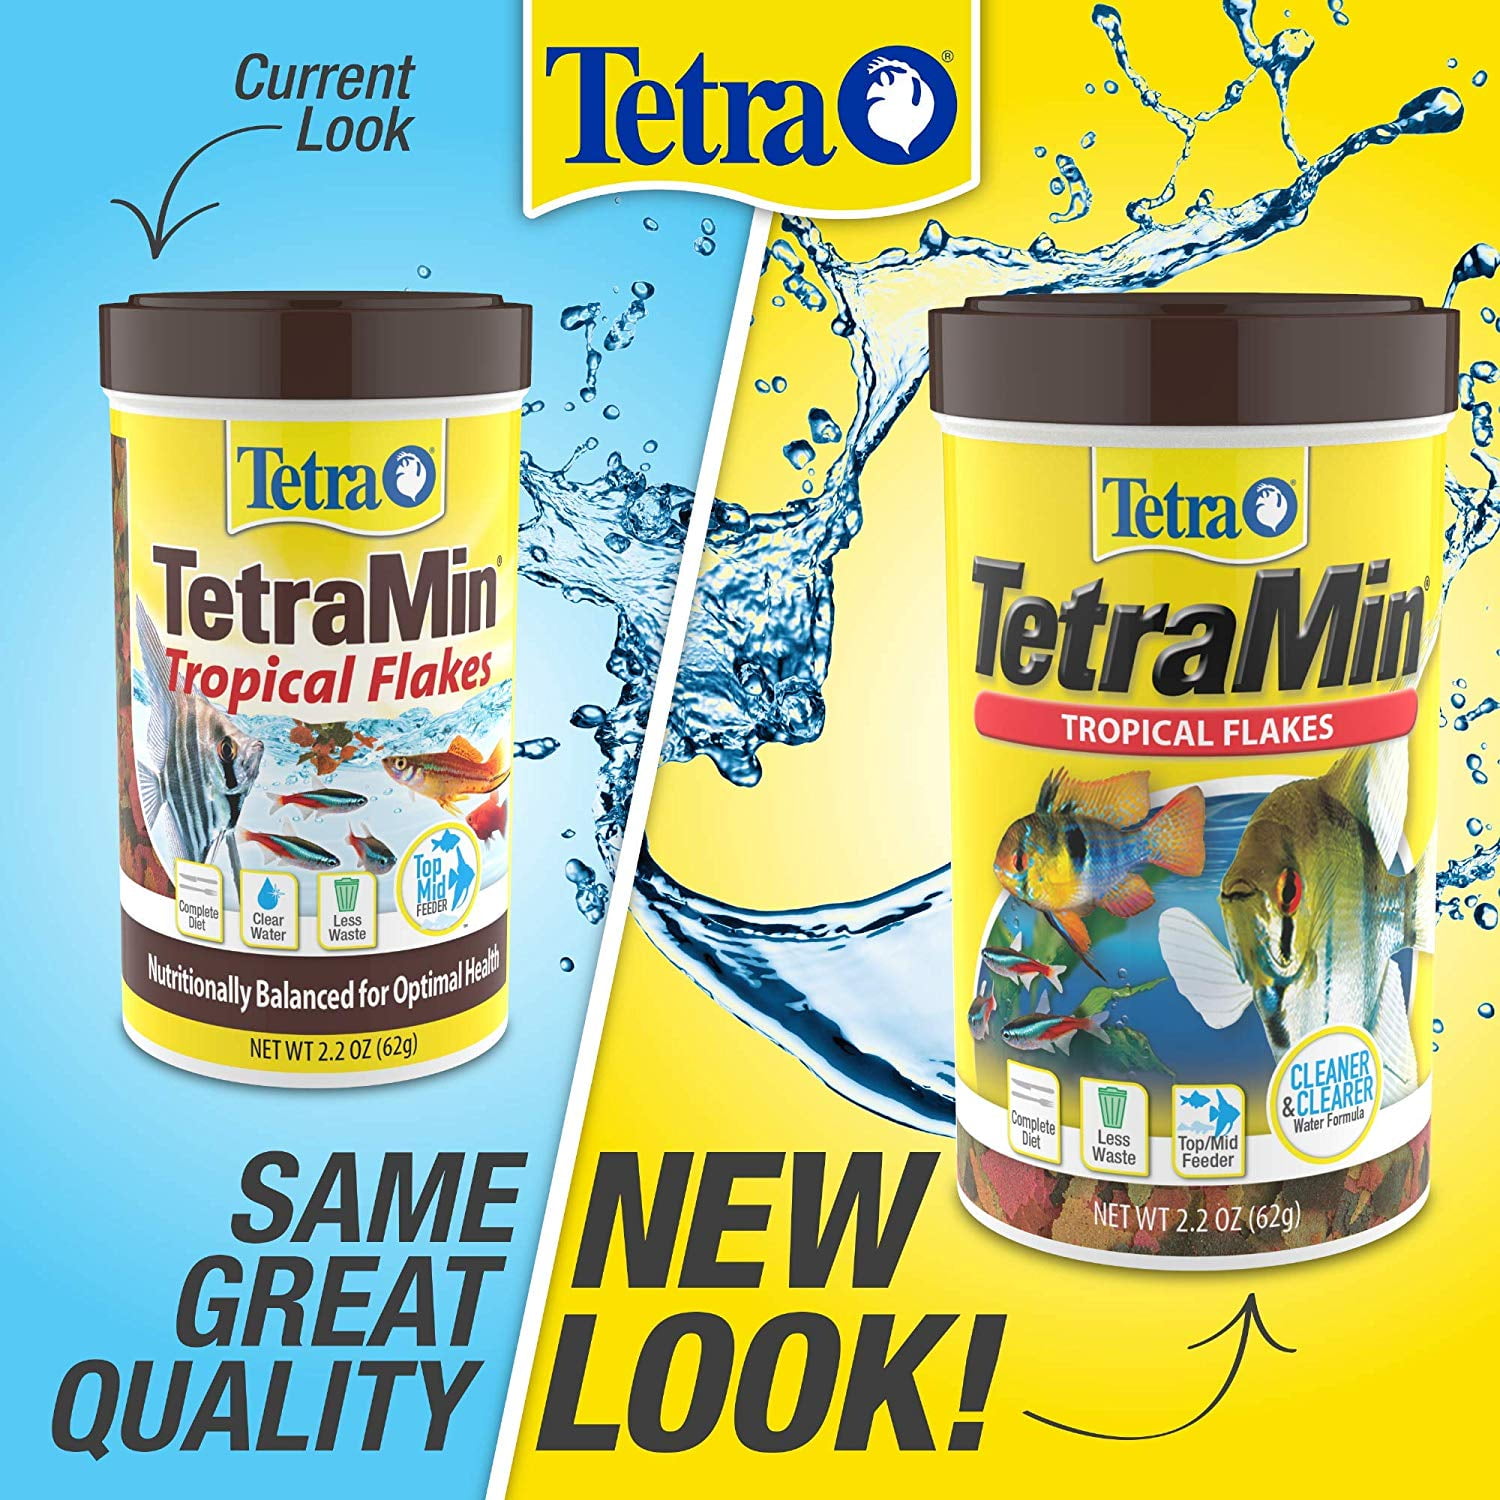 TetraMin Plus Tropical Flakes, 2.2 Ounce - CountryMax